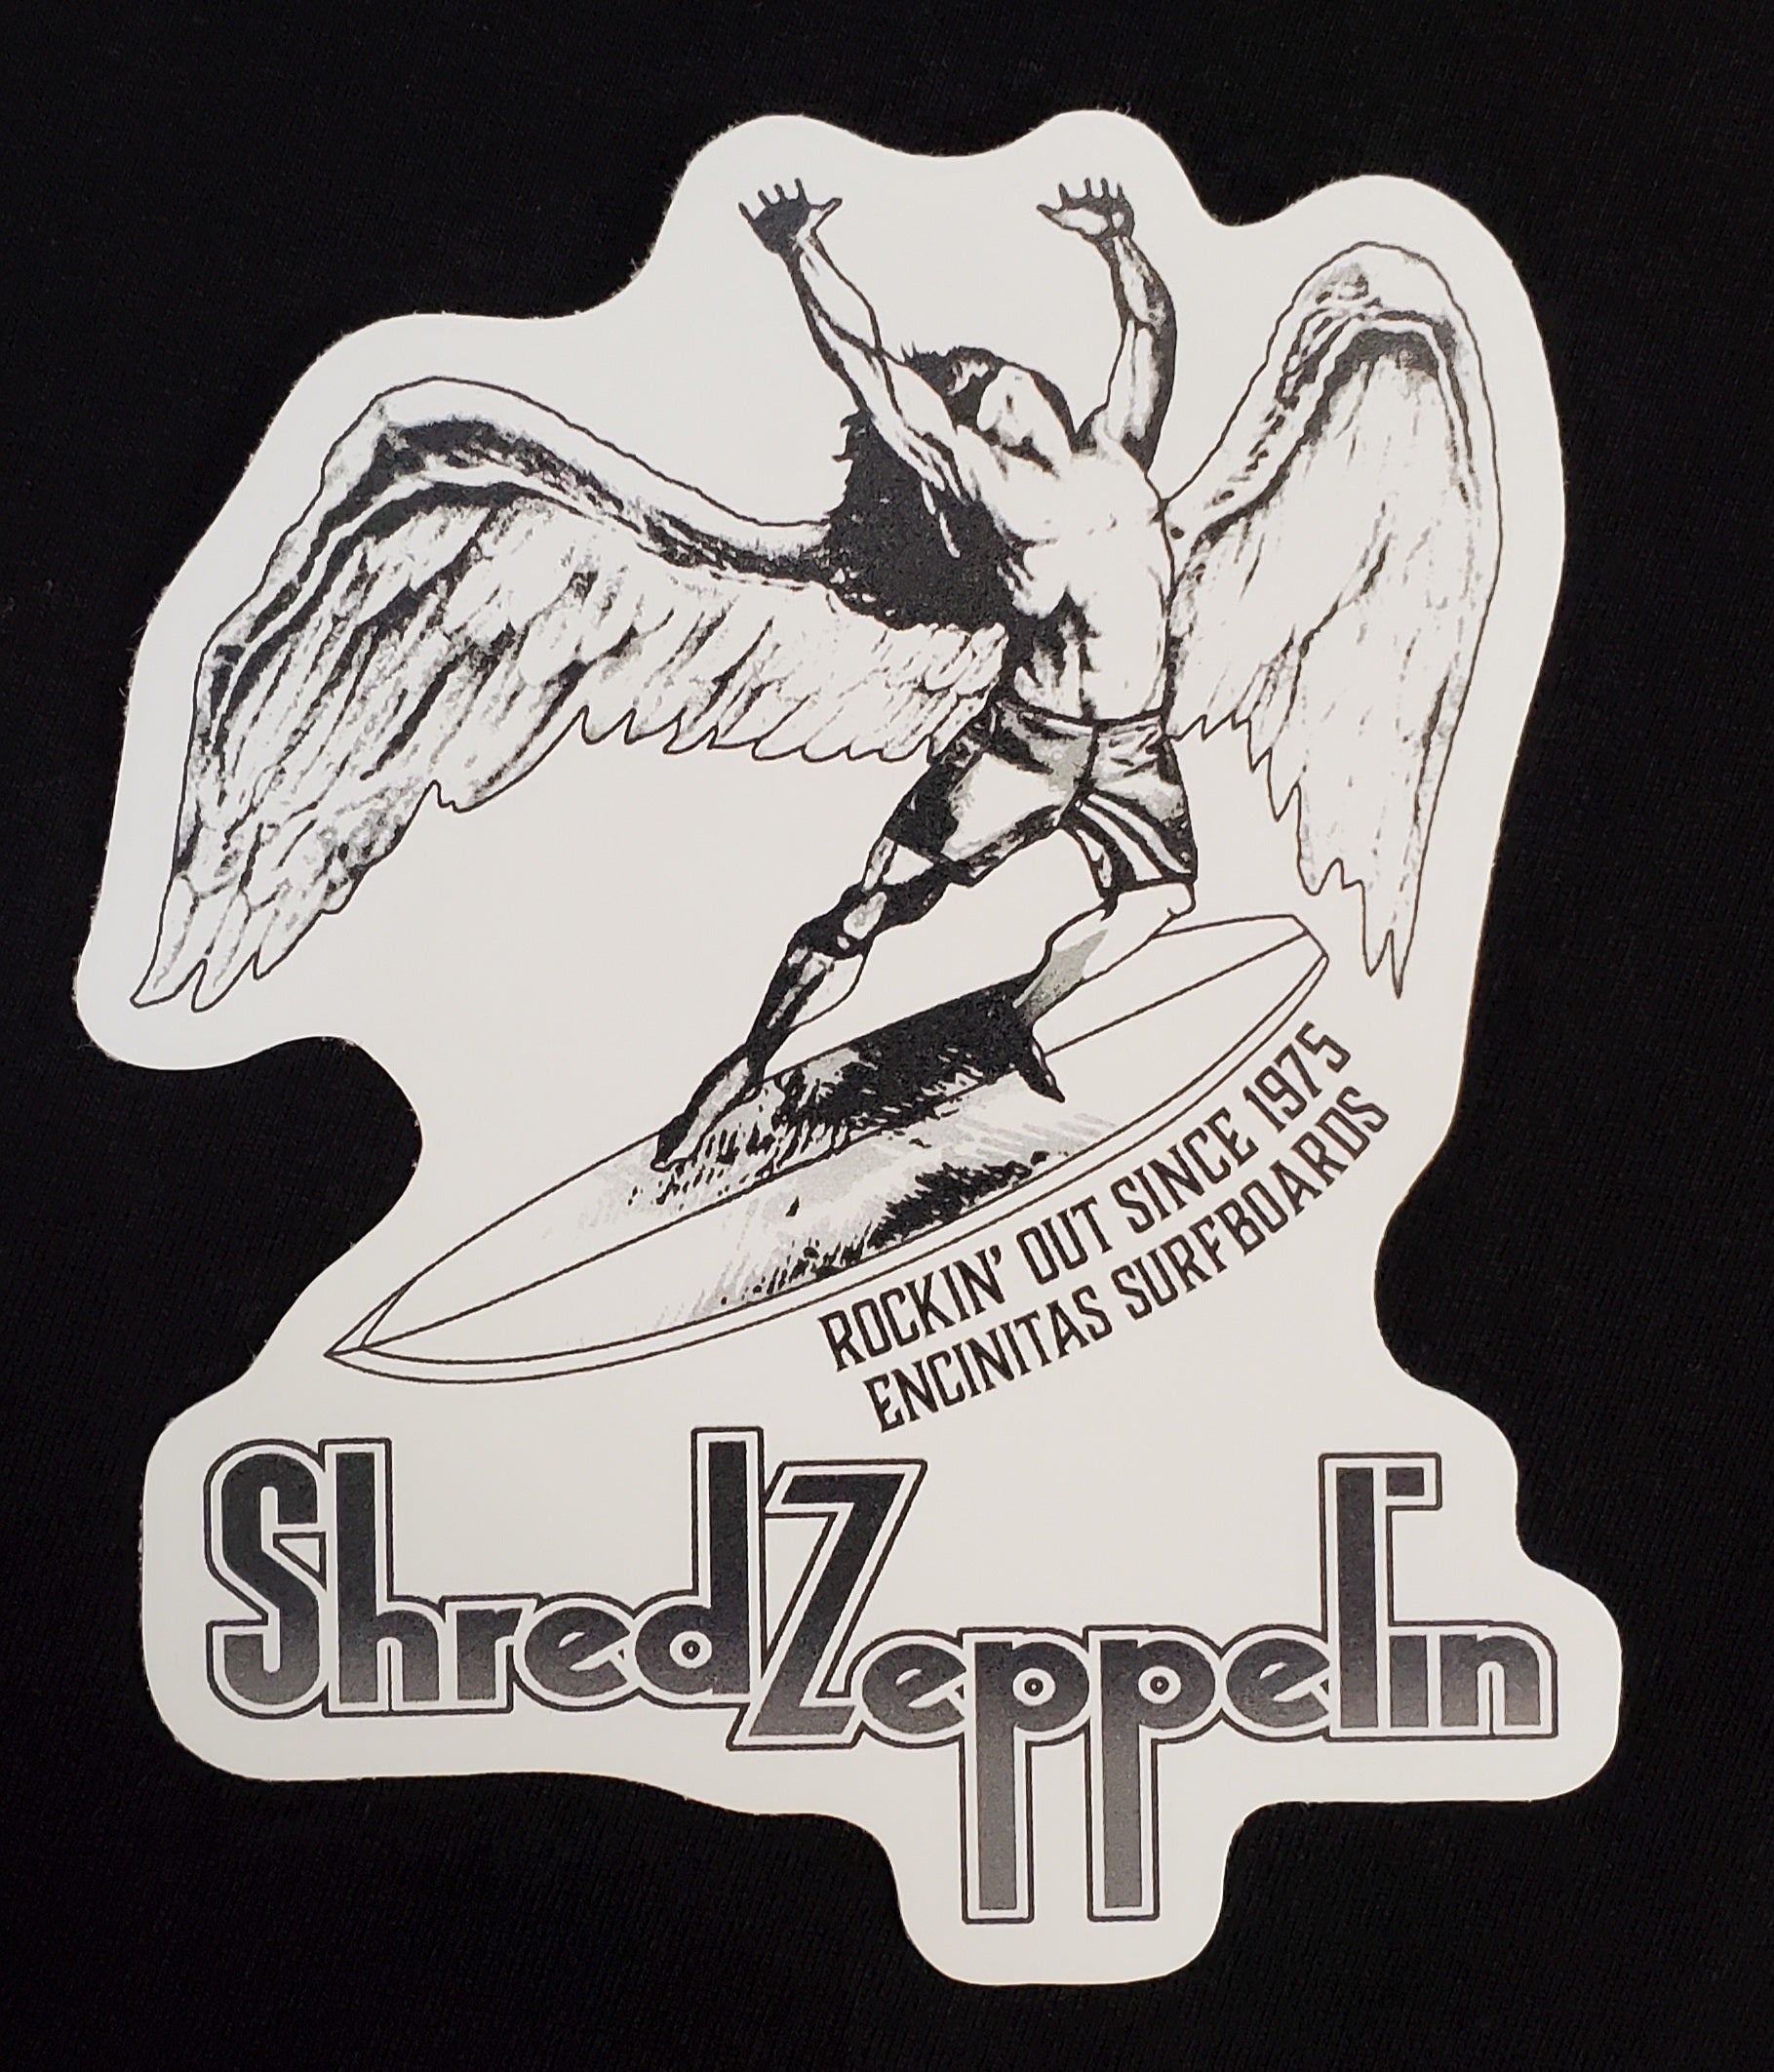 Shred Zeppelin Sticker-Coastal Classics-encinitas,encinitassurfboards,local,sticker